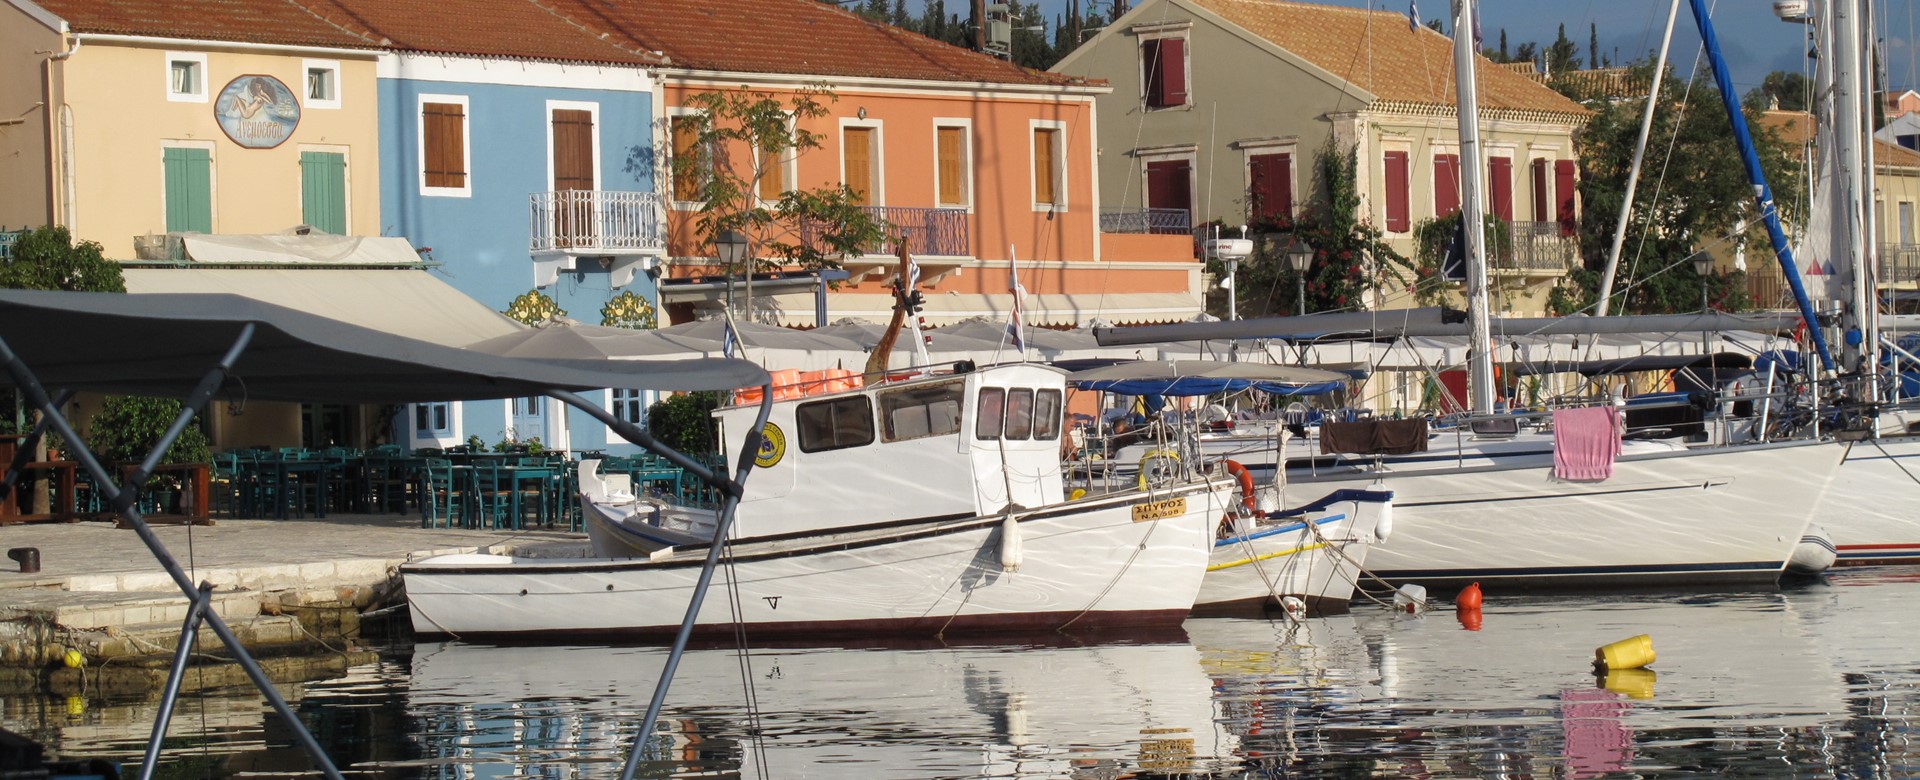 Charming marina with waterside restaurants at Villa Lithia, Fiscardo, Kefalonia, Greek Islands